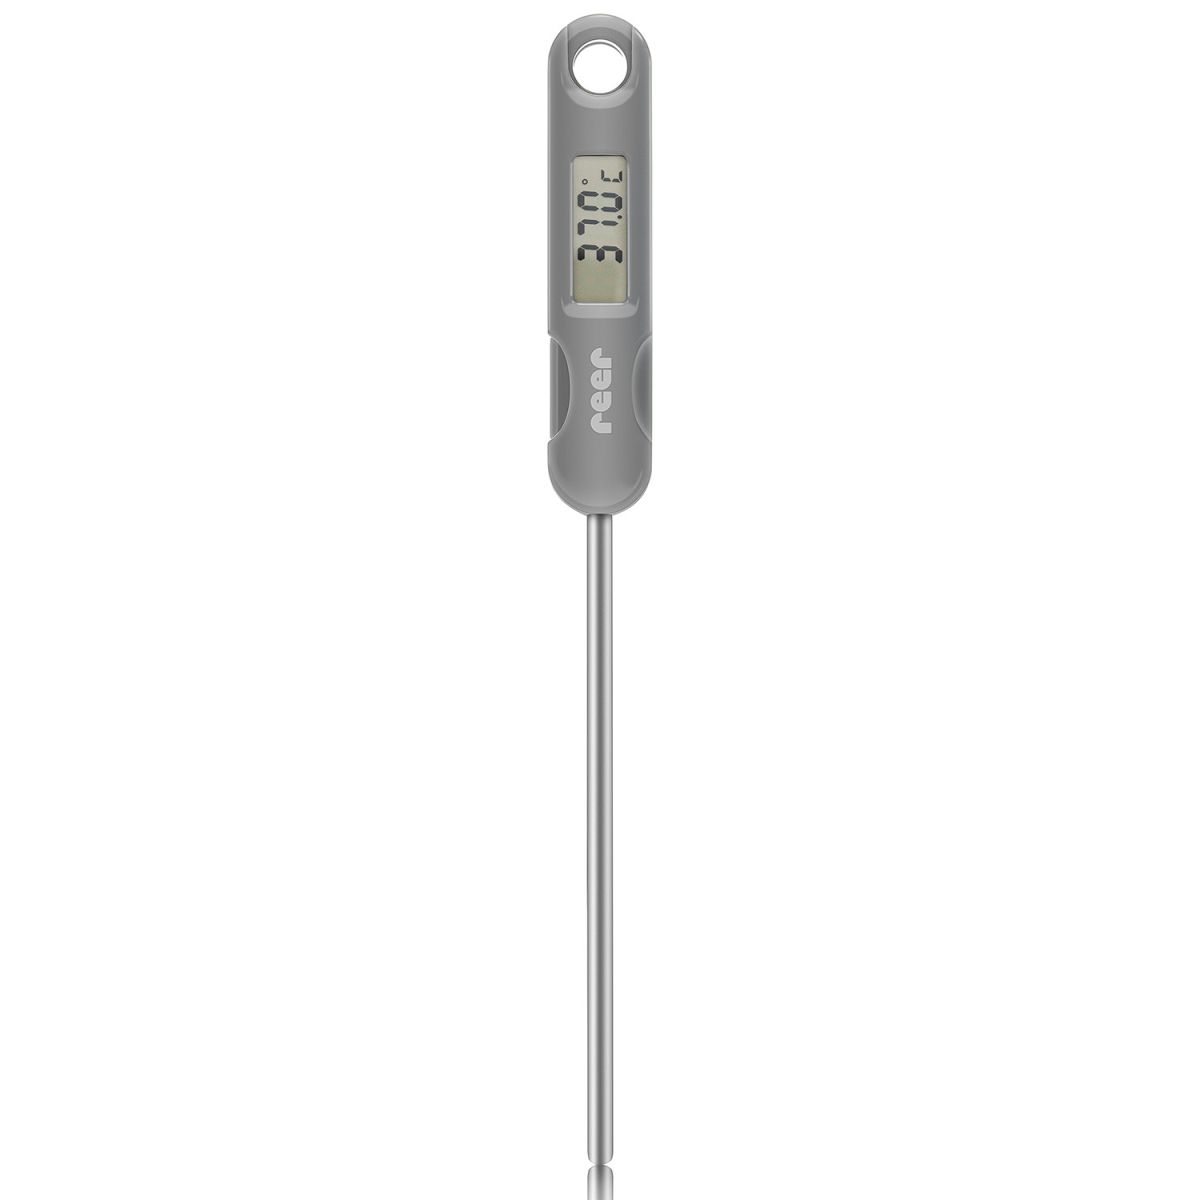 FoodTemp digital bottle thermometer